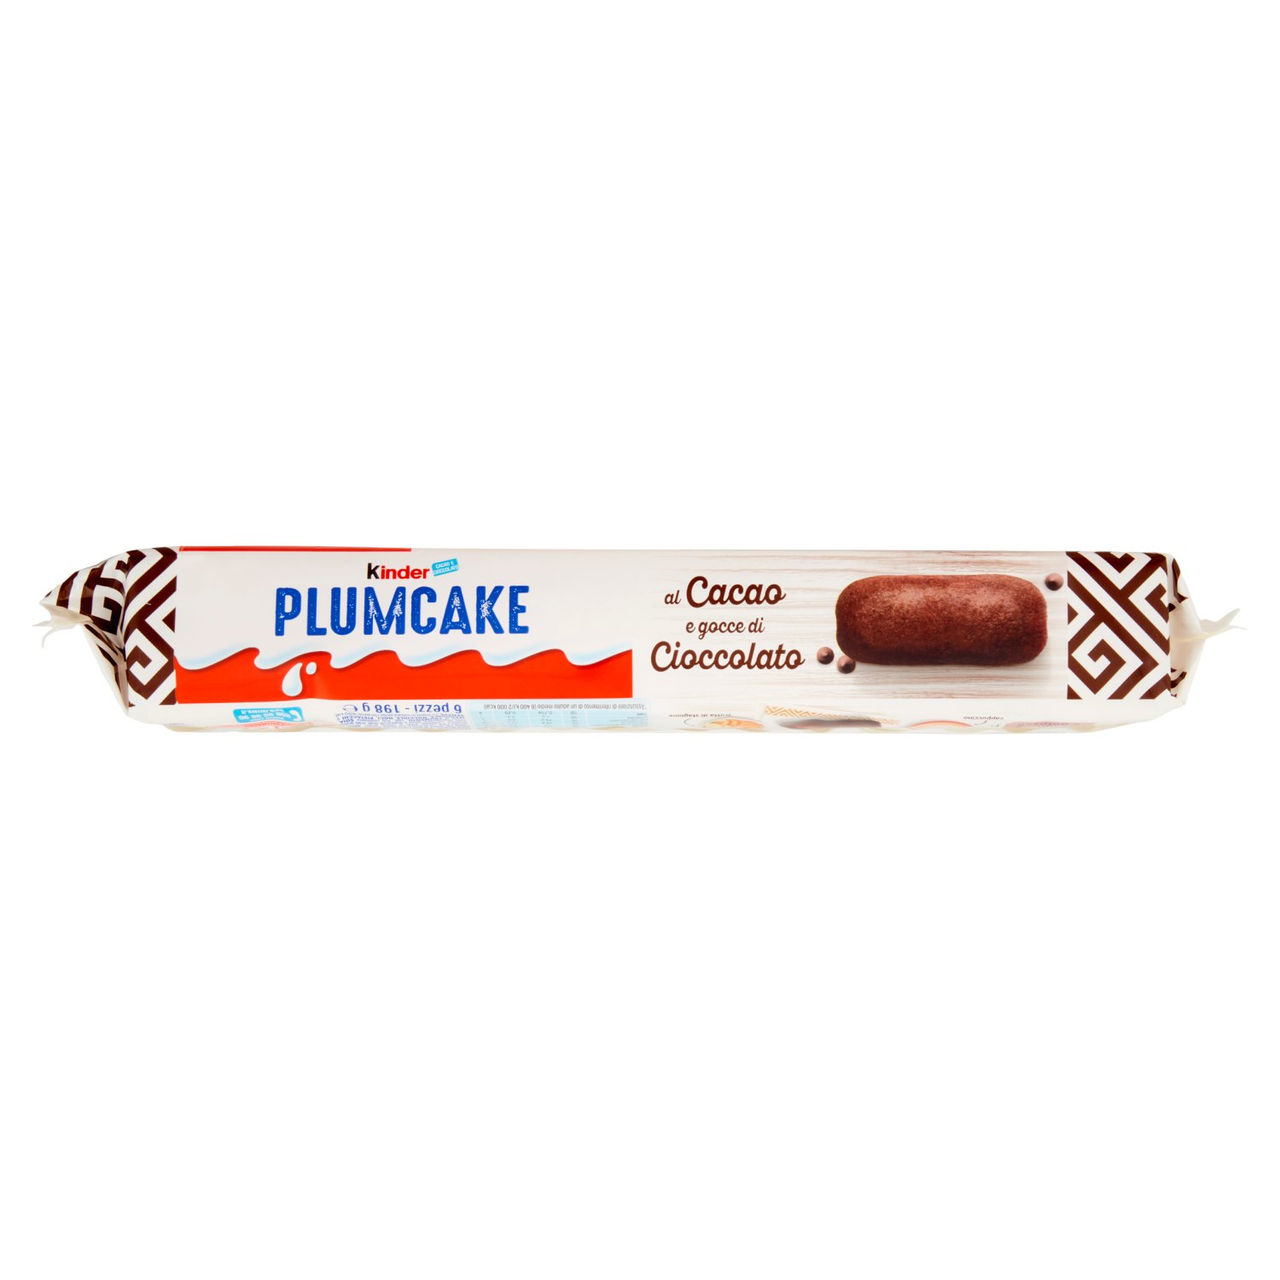 Kinder Plumcake al Cacao e gocce di Cioccolato 6 x 33 g